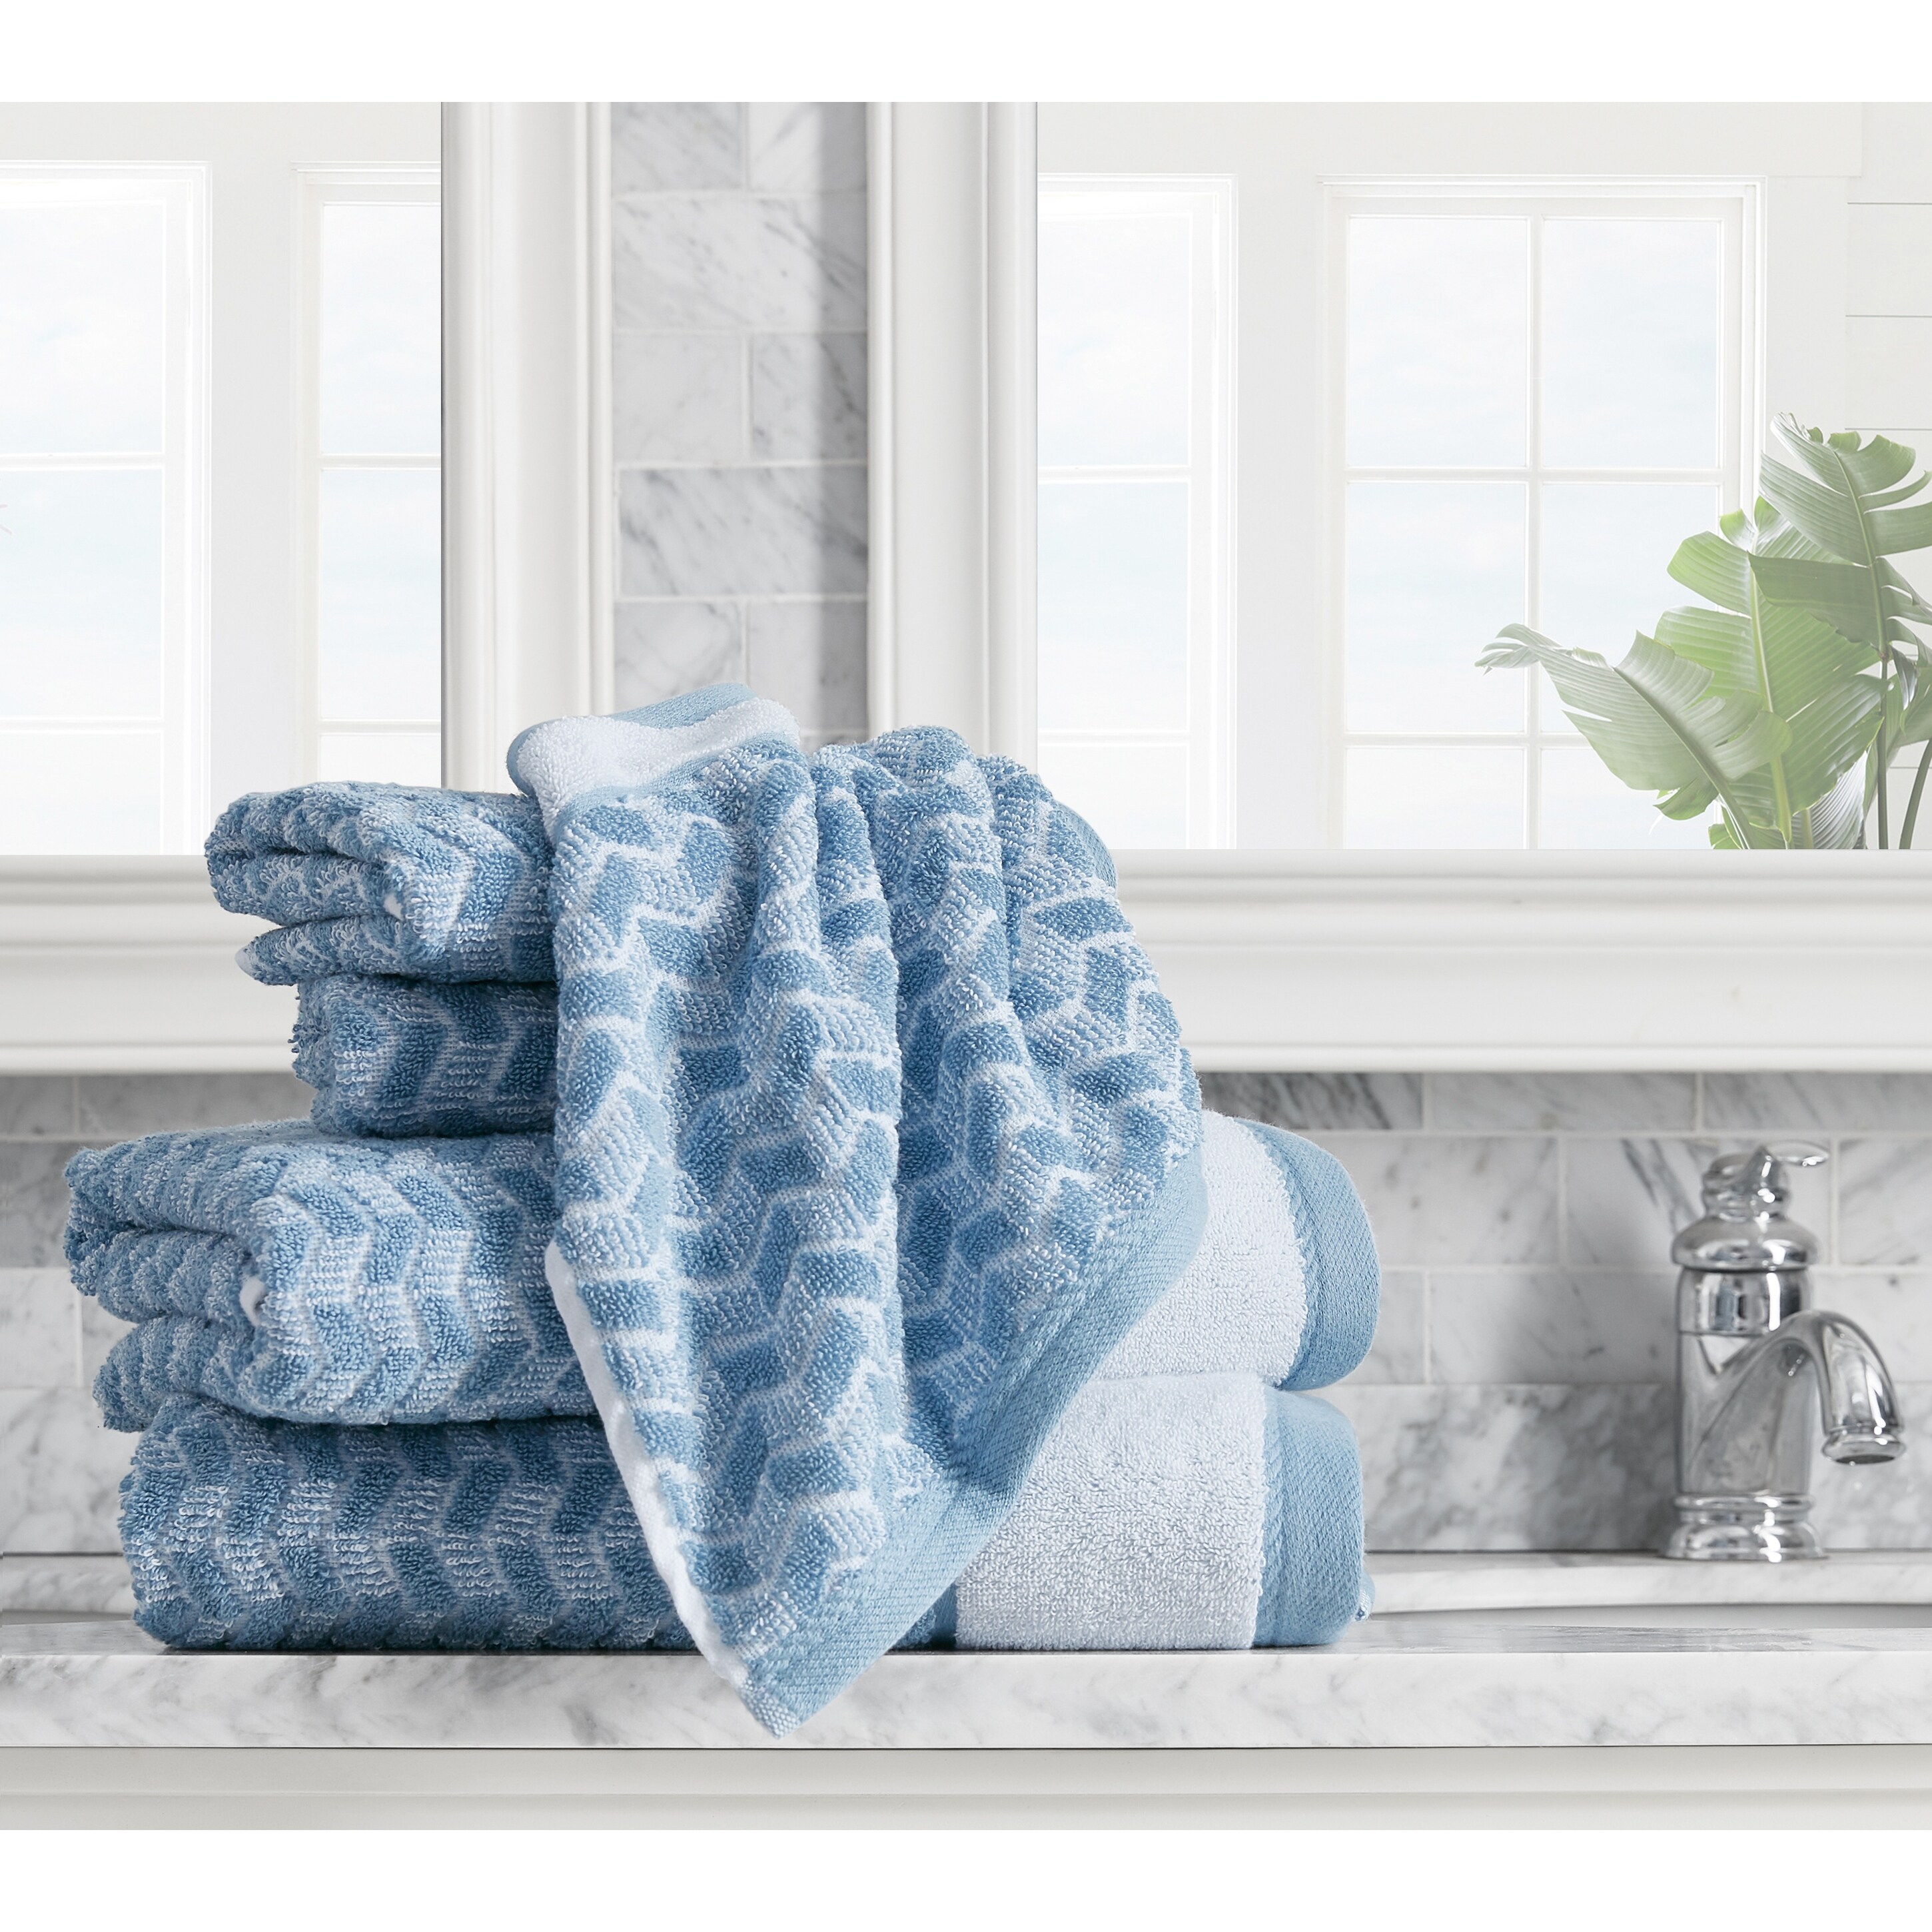 Somerset Home Chevron 100% Cotton 6-Piece Towel Set - White